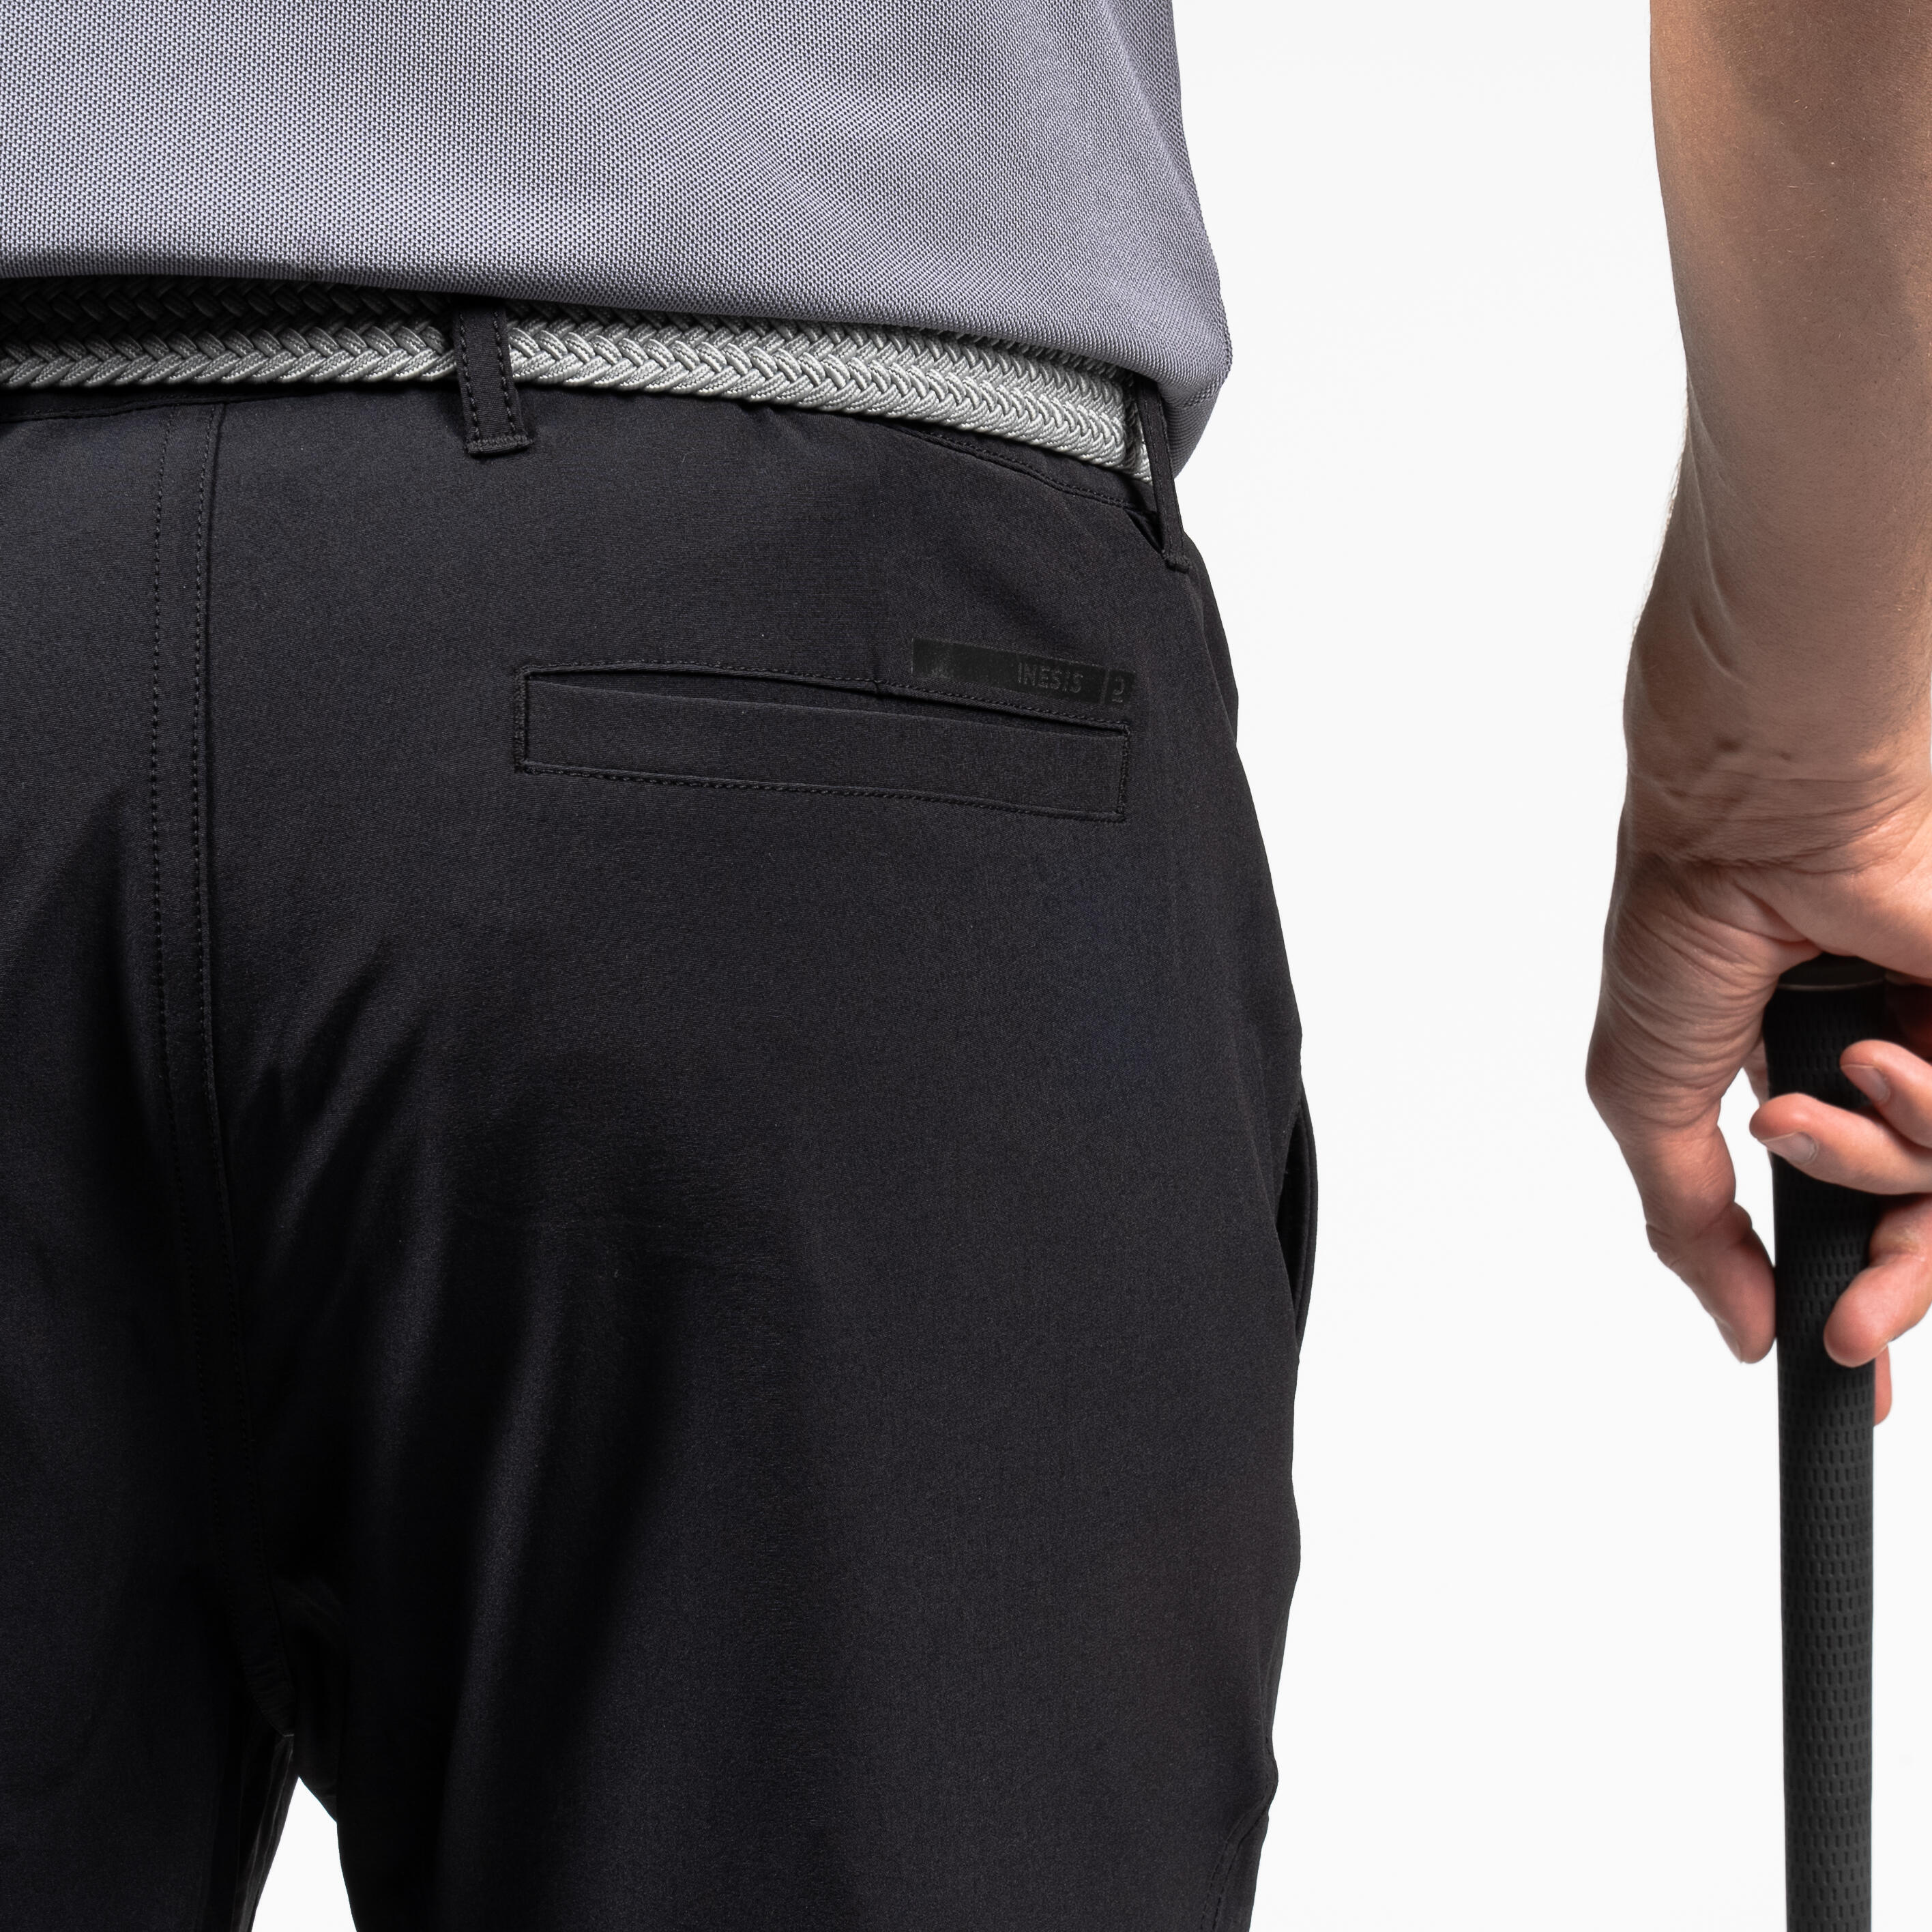 Men's golf trousers - WW 500 black 4/4